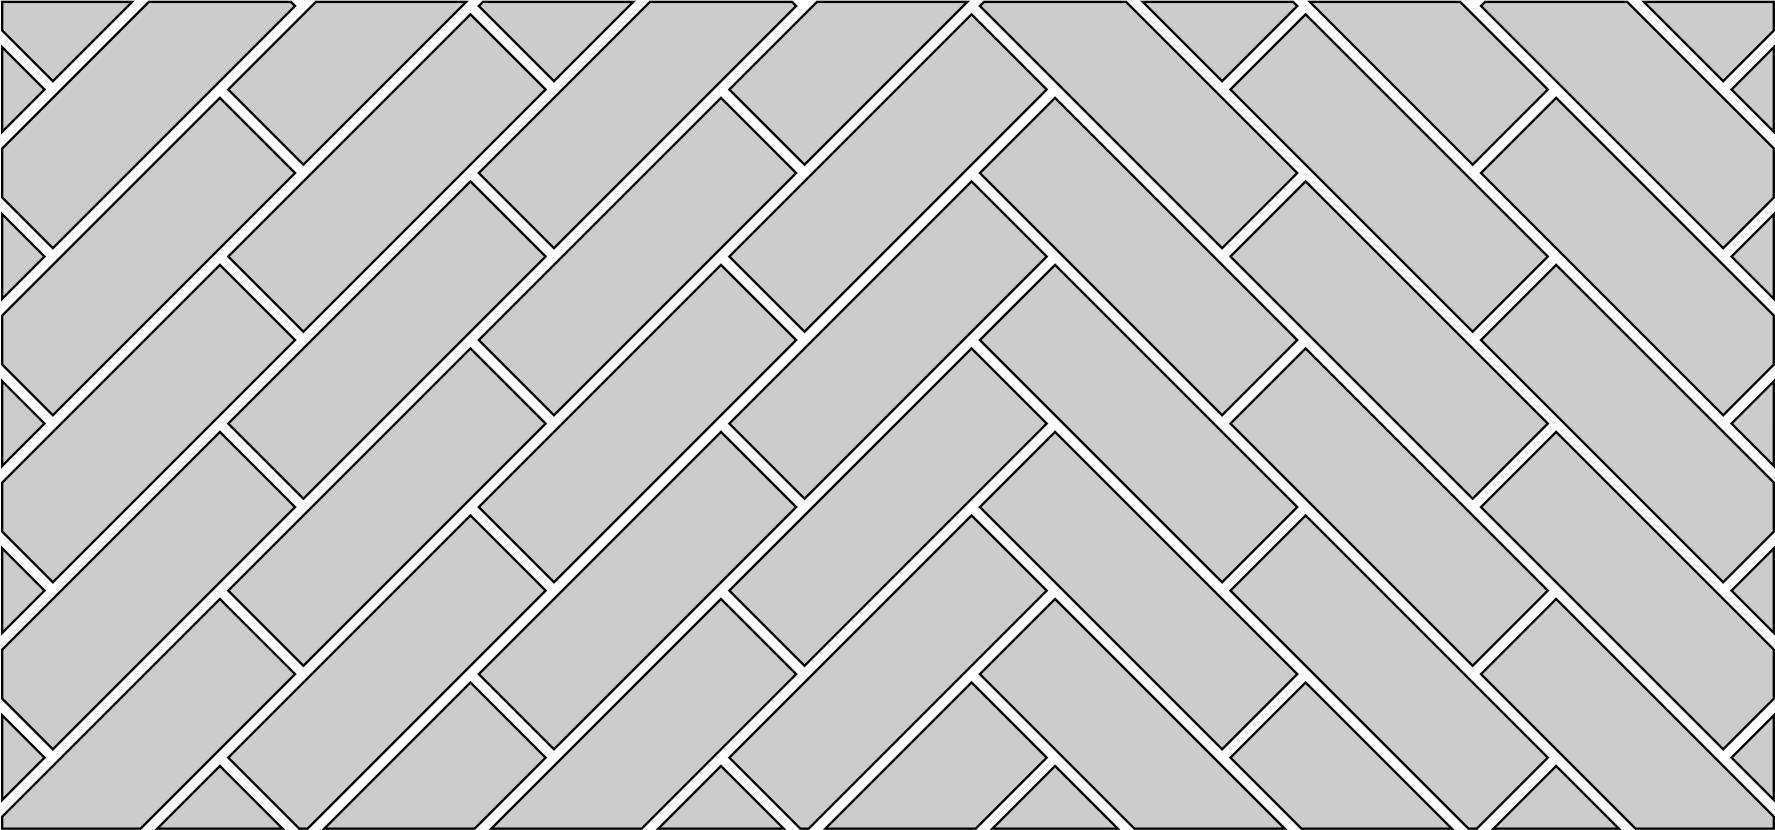 Diagonalverband[1]